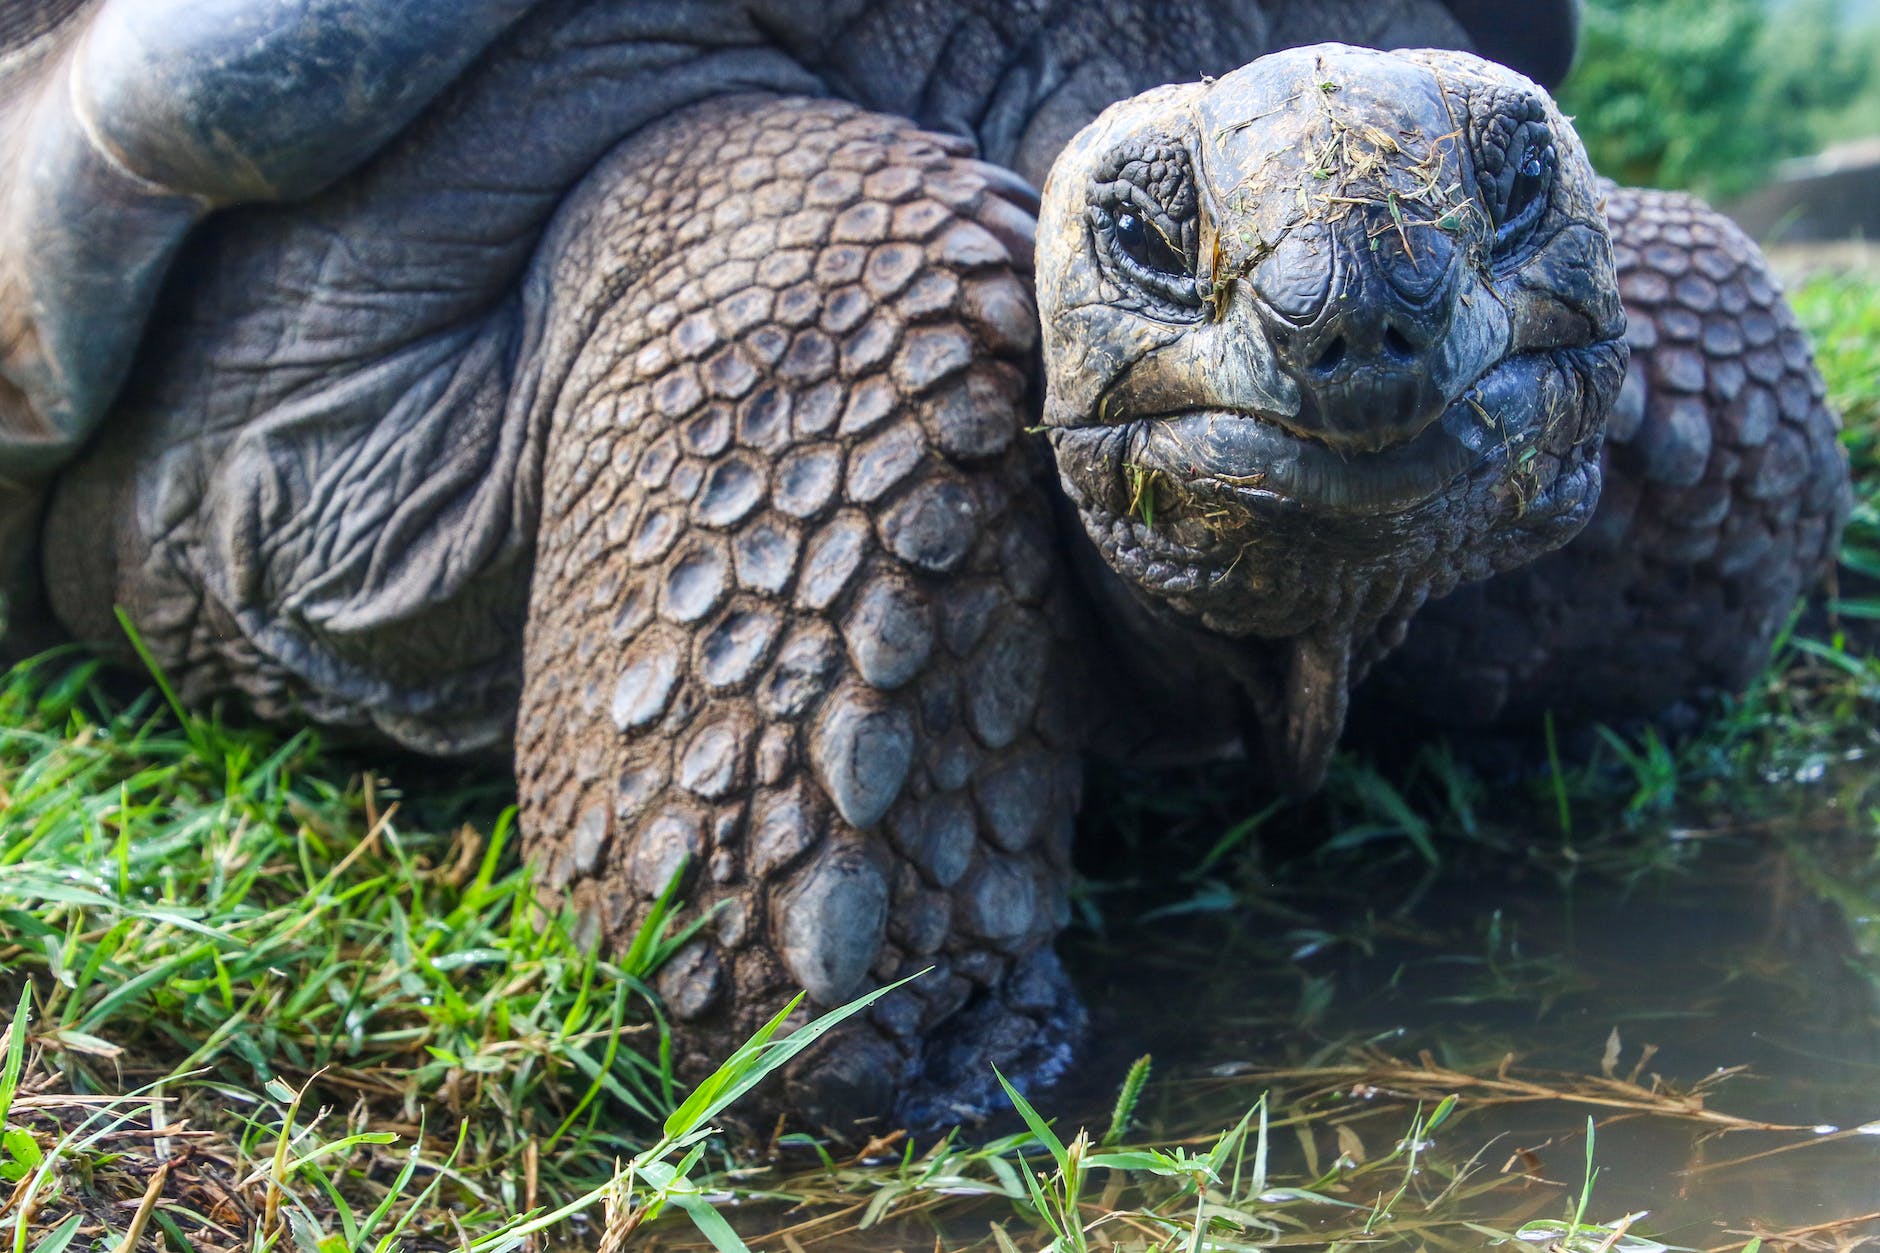 closeup photo of galapagos tortoise. Slow and steady, ways to beat dysthymia